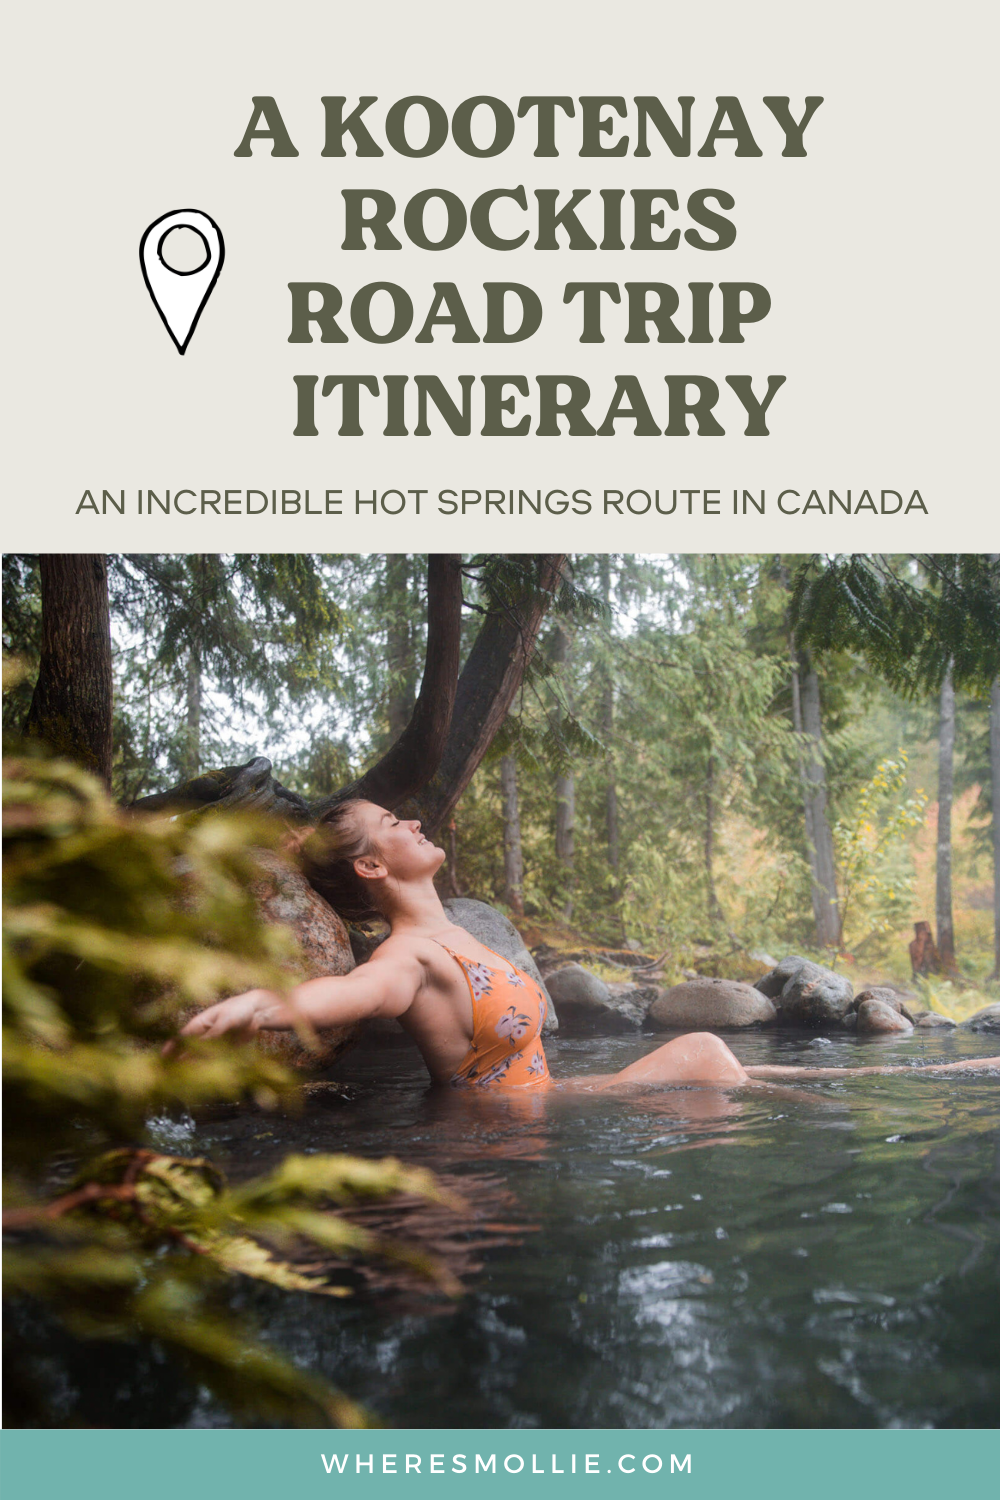 A 1 week Hot Springs road trip through the Kootenay Rockies, BC Canada